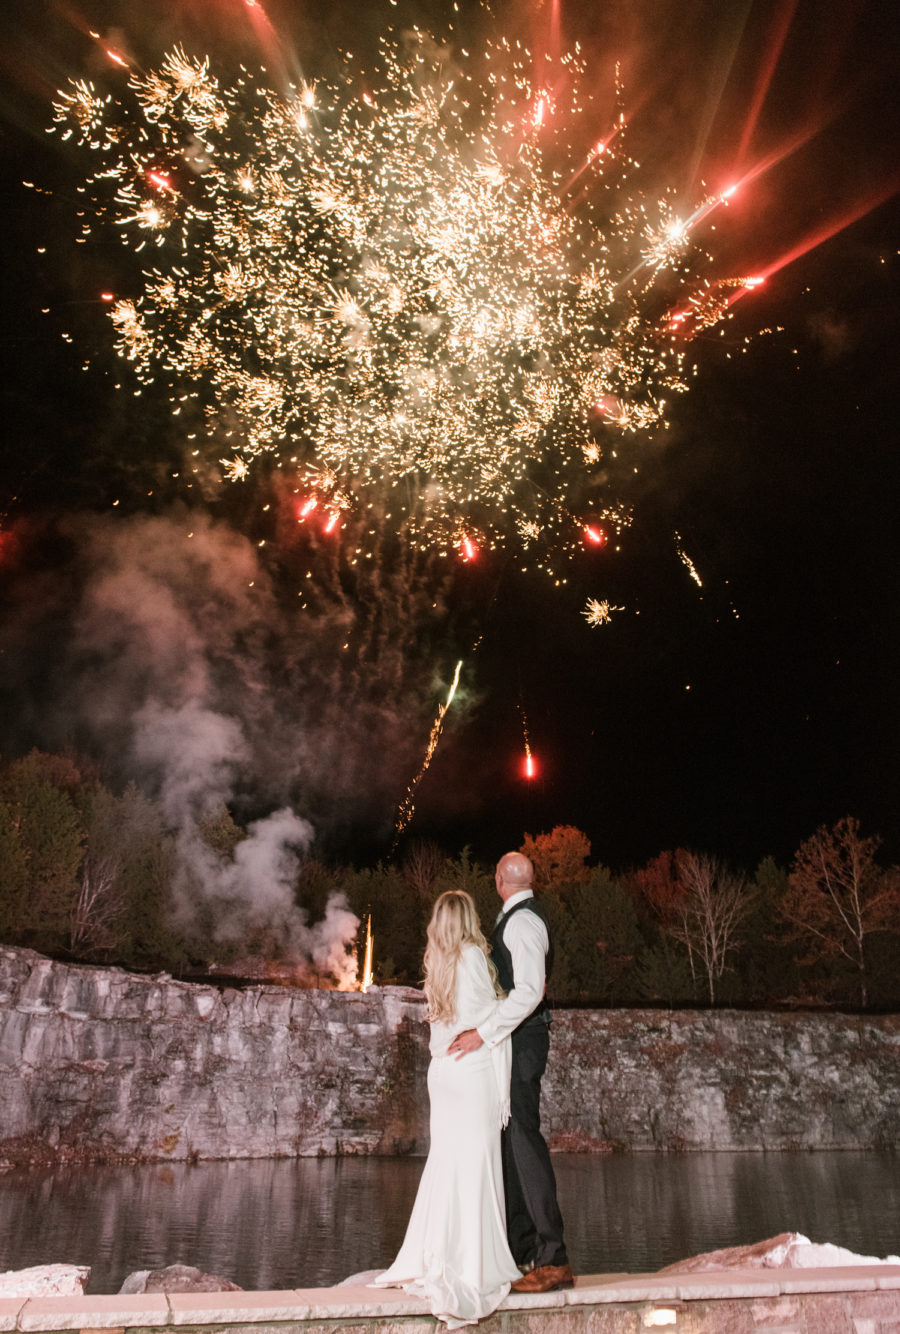 Wedding Fireworks captured by Shelby Rae Photographs on Nashville Bride Guide